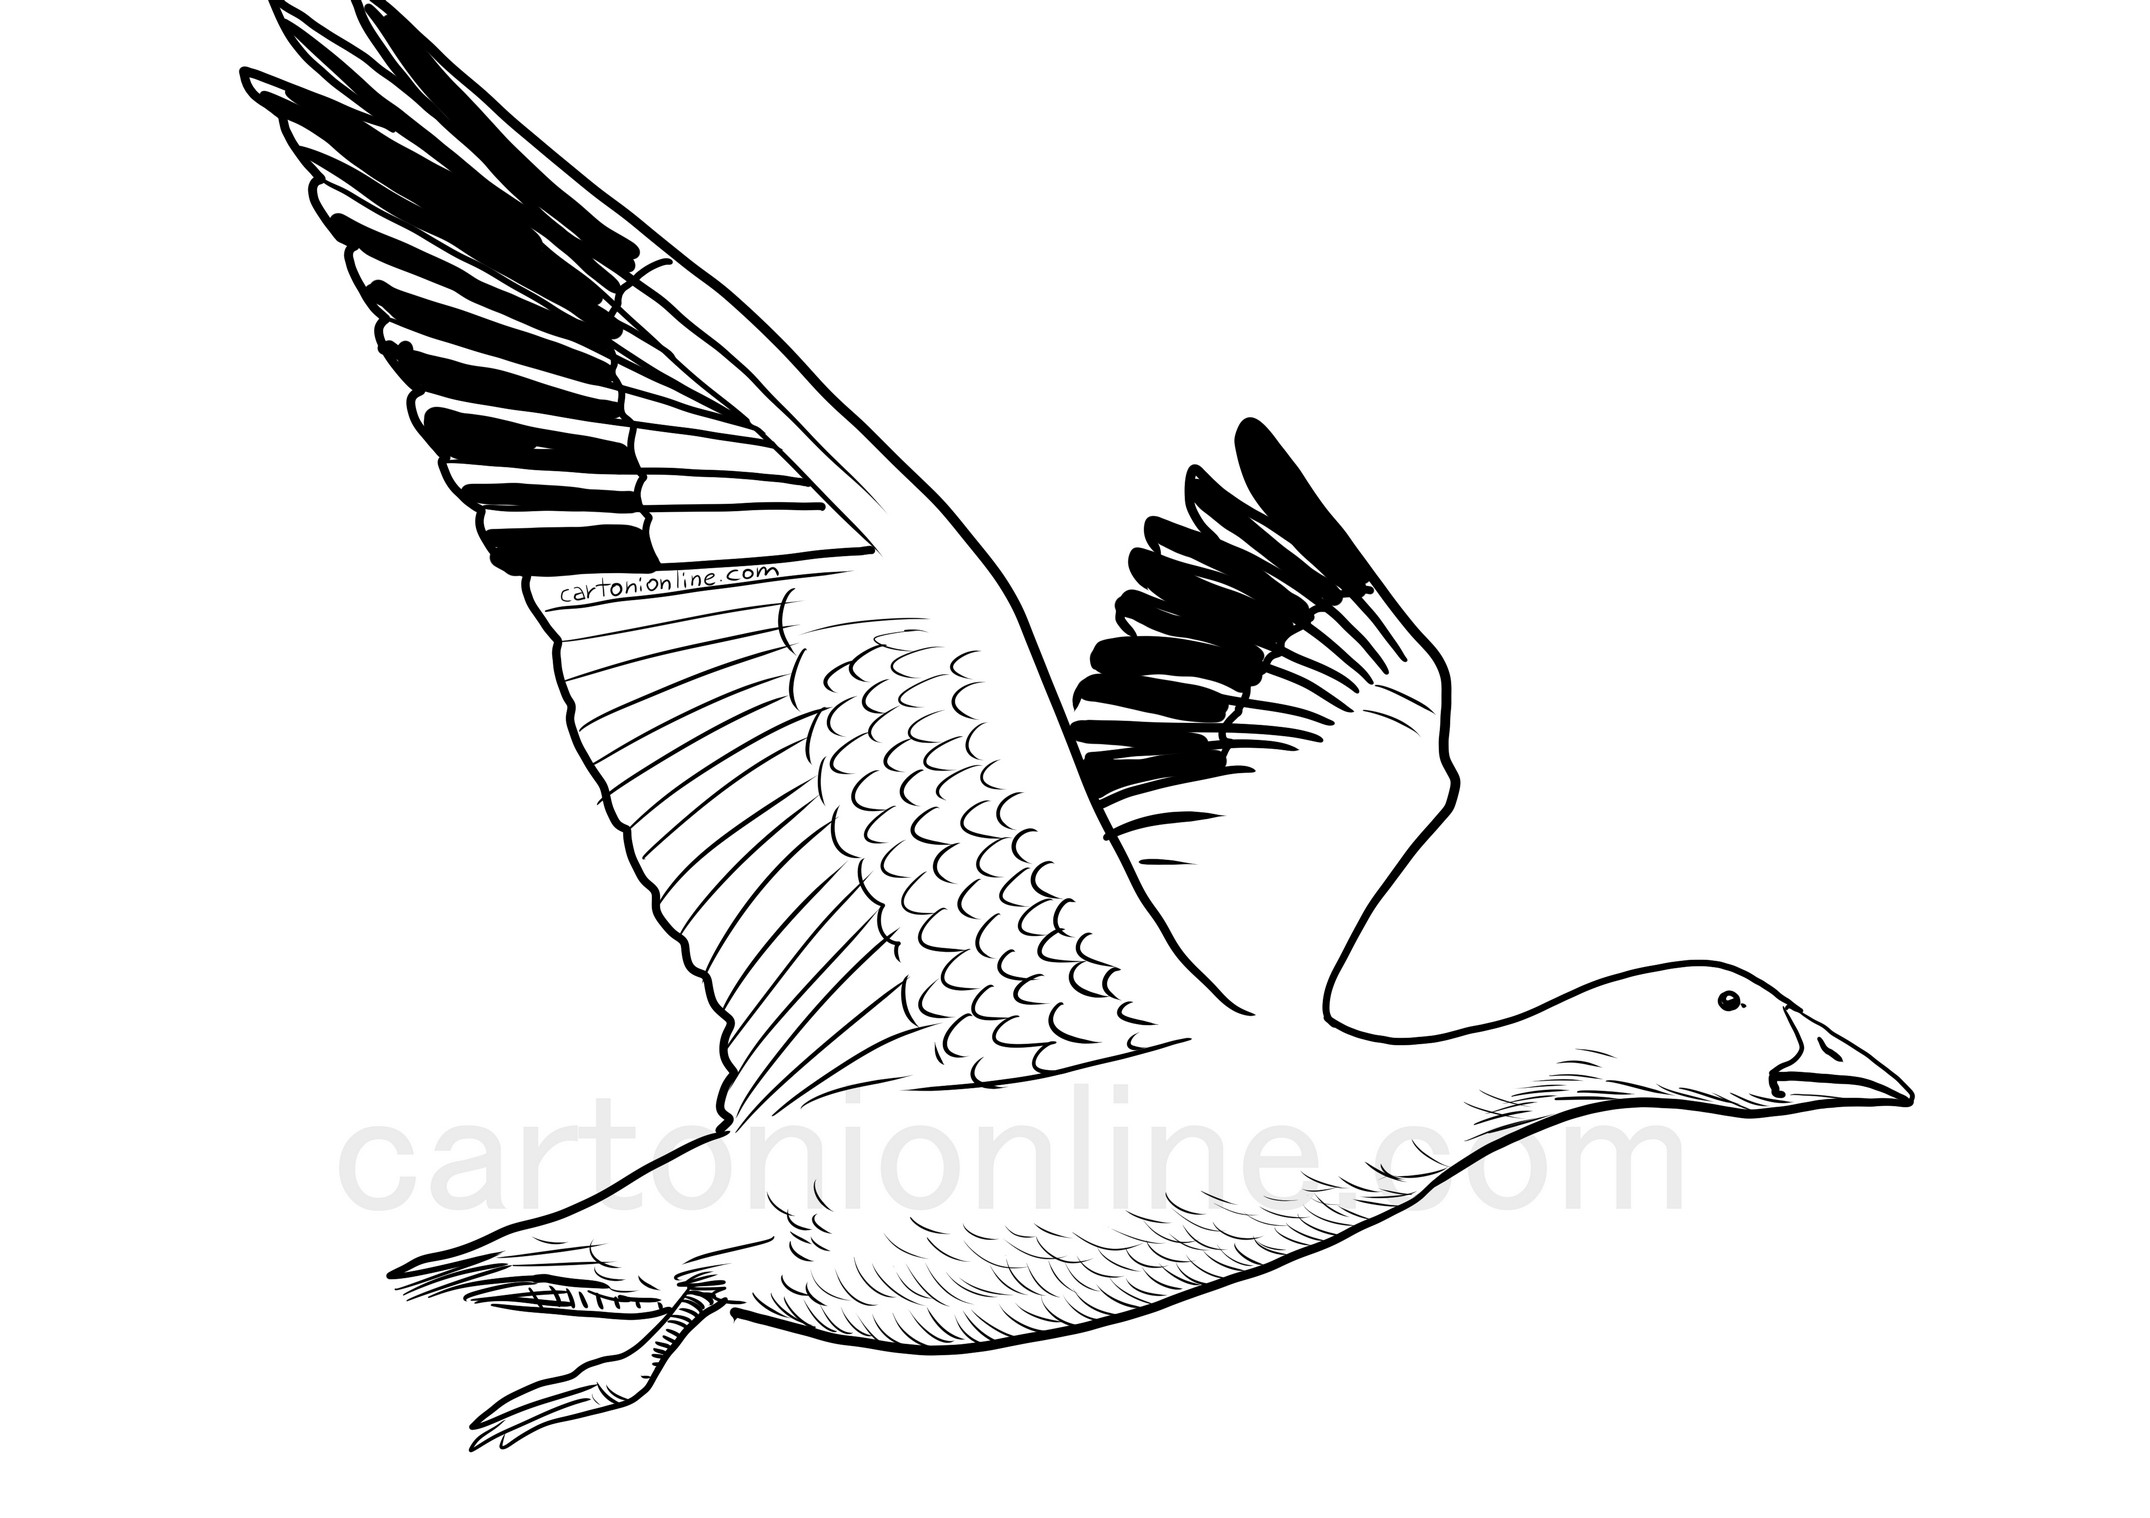 Dibujo de ganso en vuelo para colorear